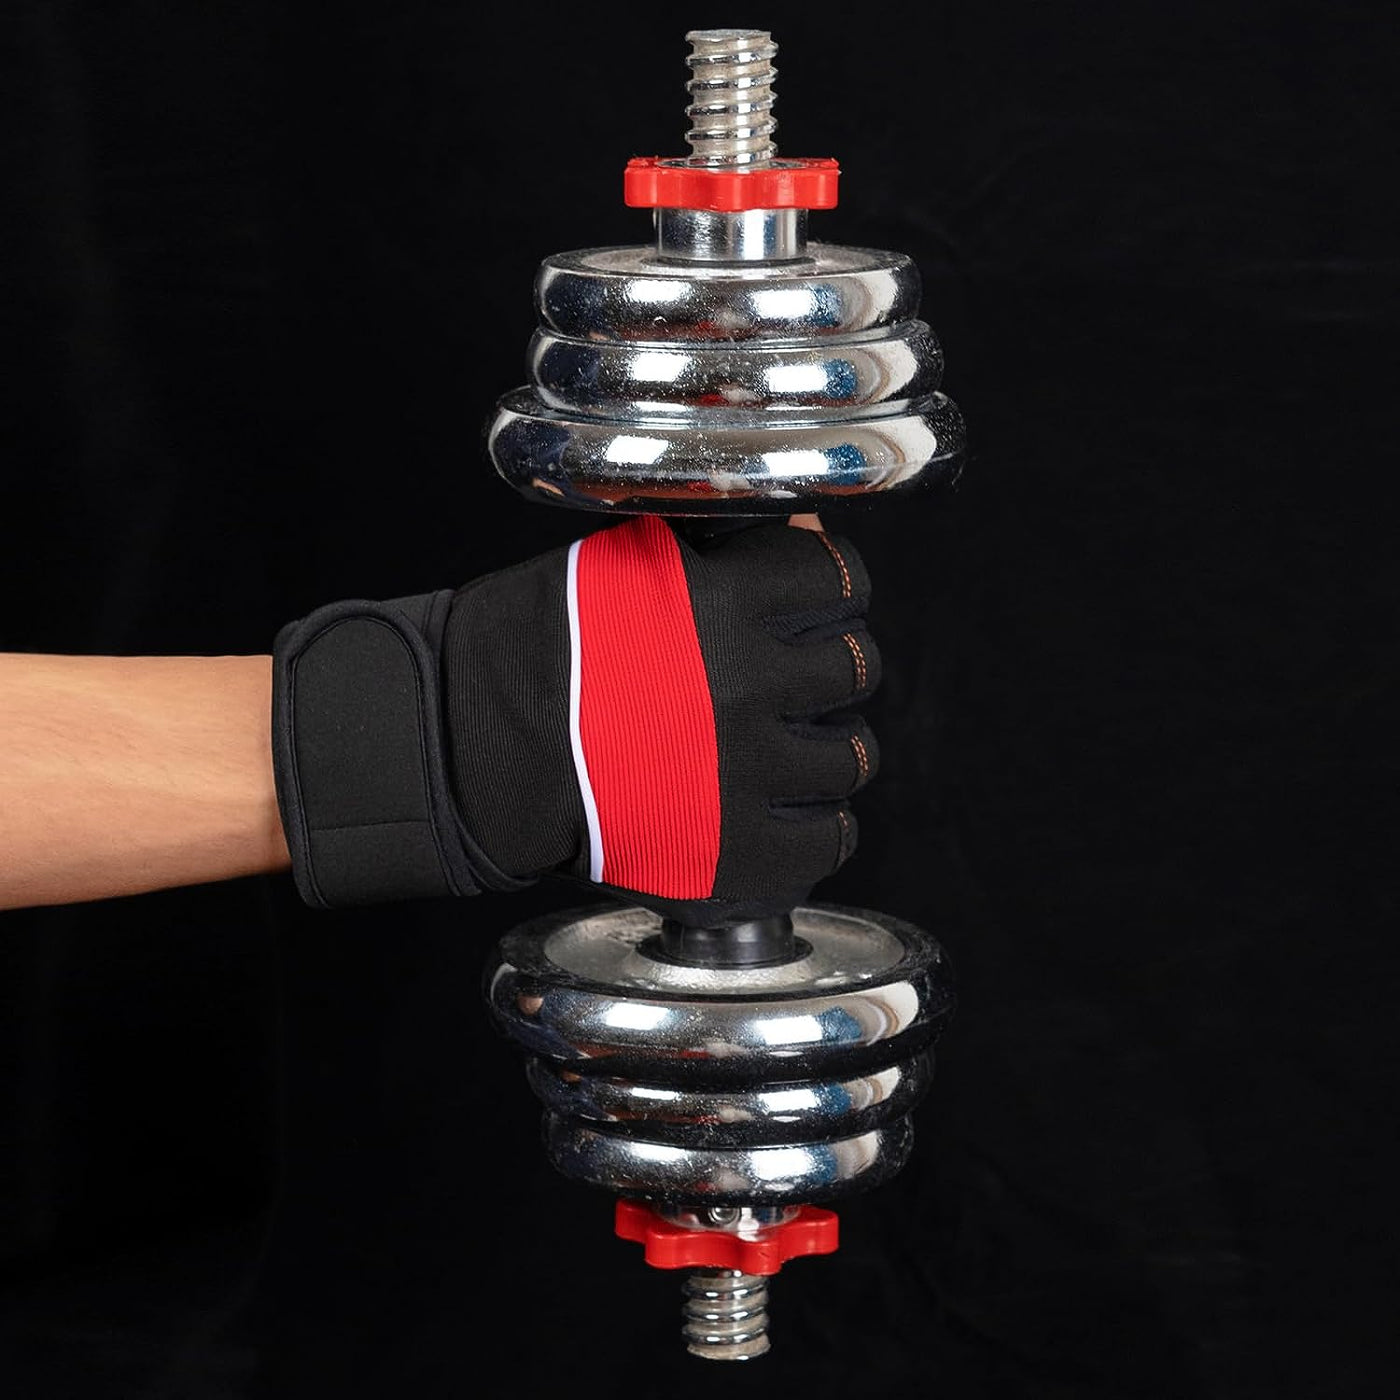 GCSIOM Fingerless Exercise Gloves Adjustable Wrist Wraps